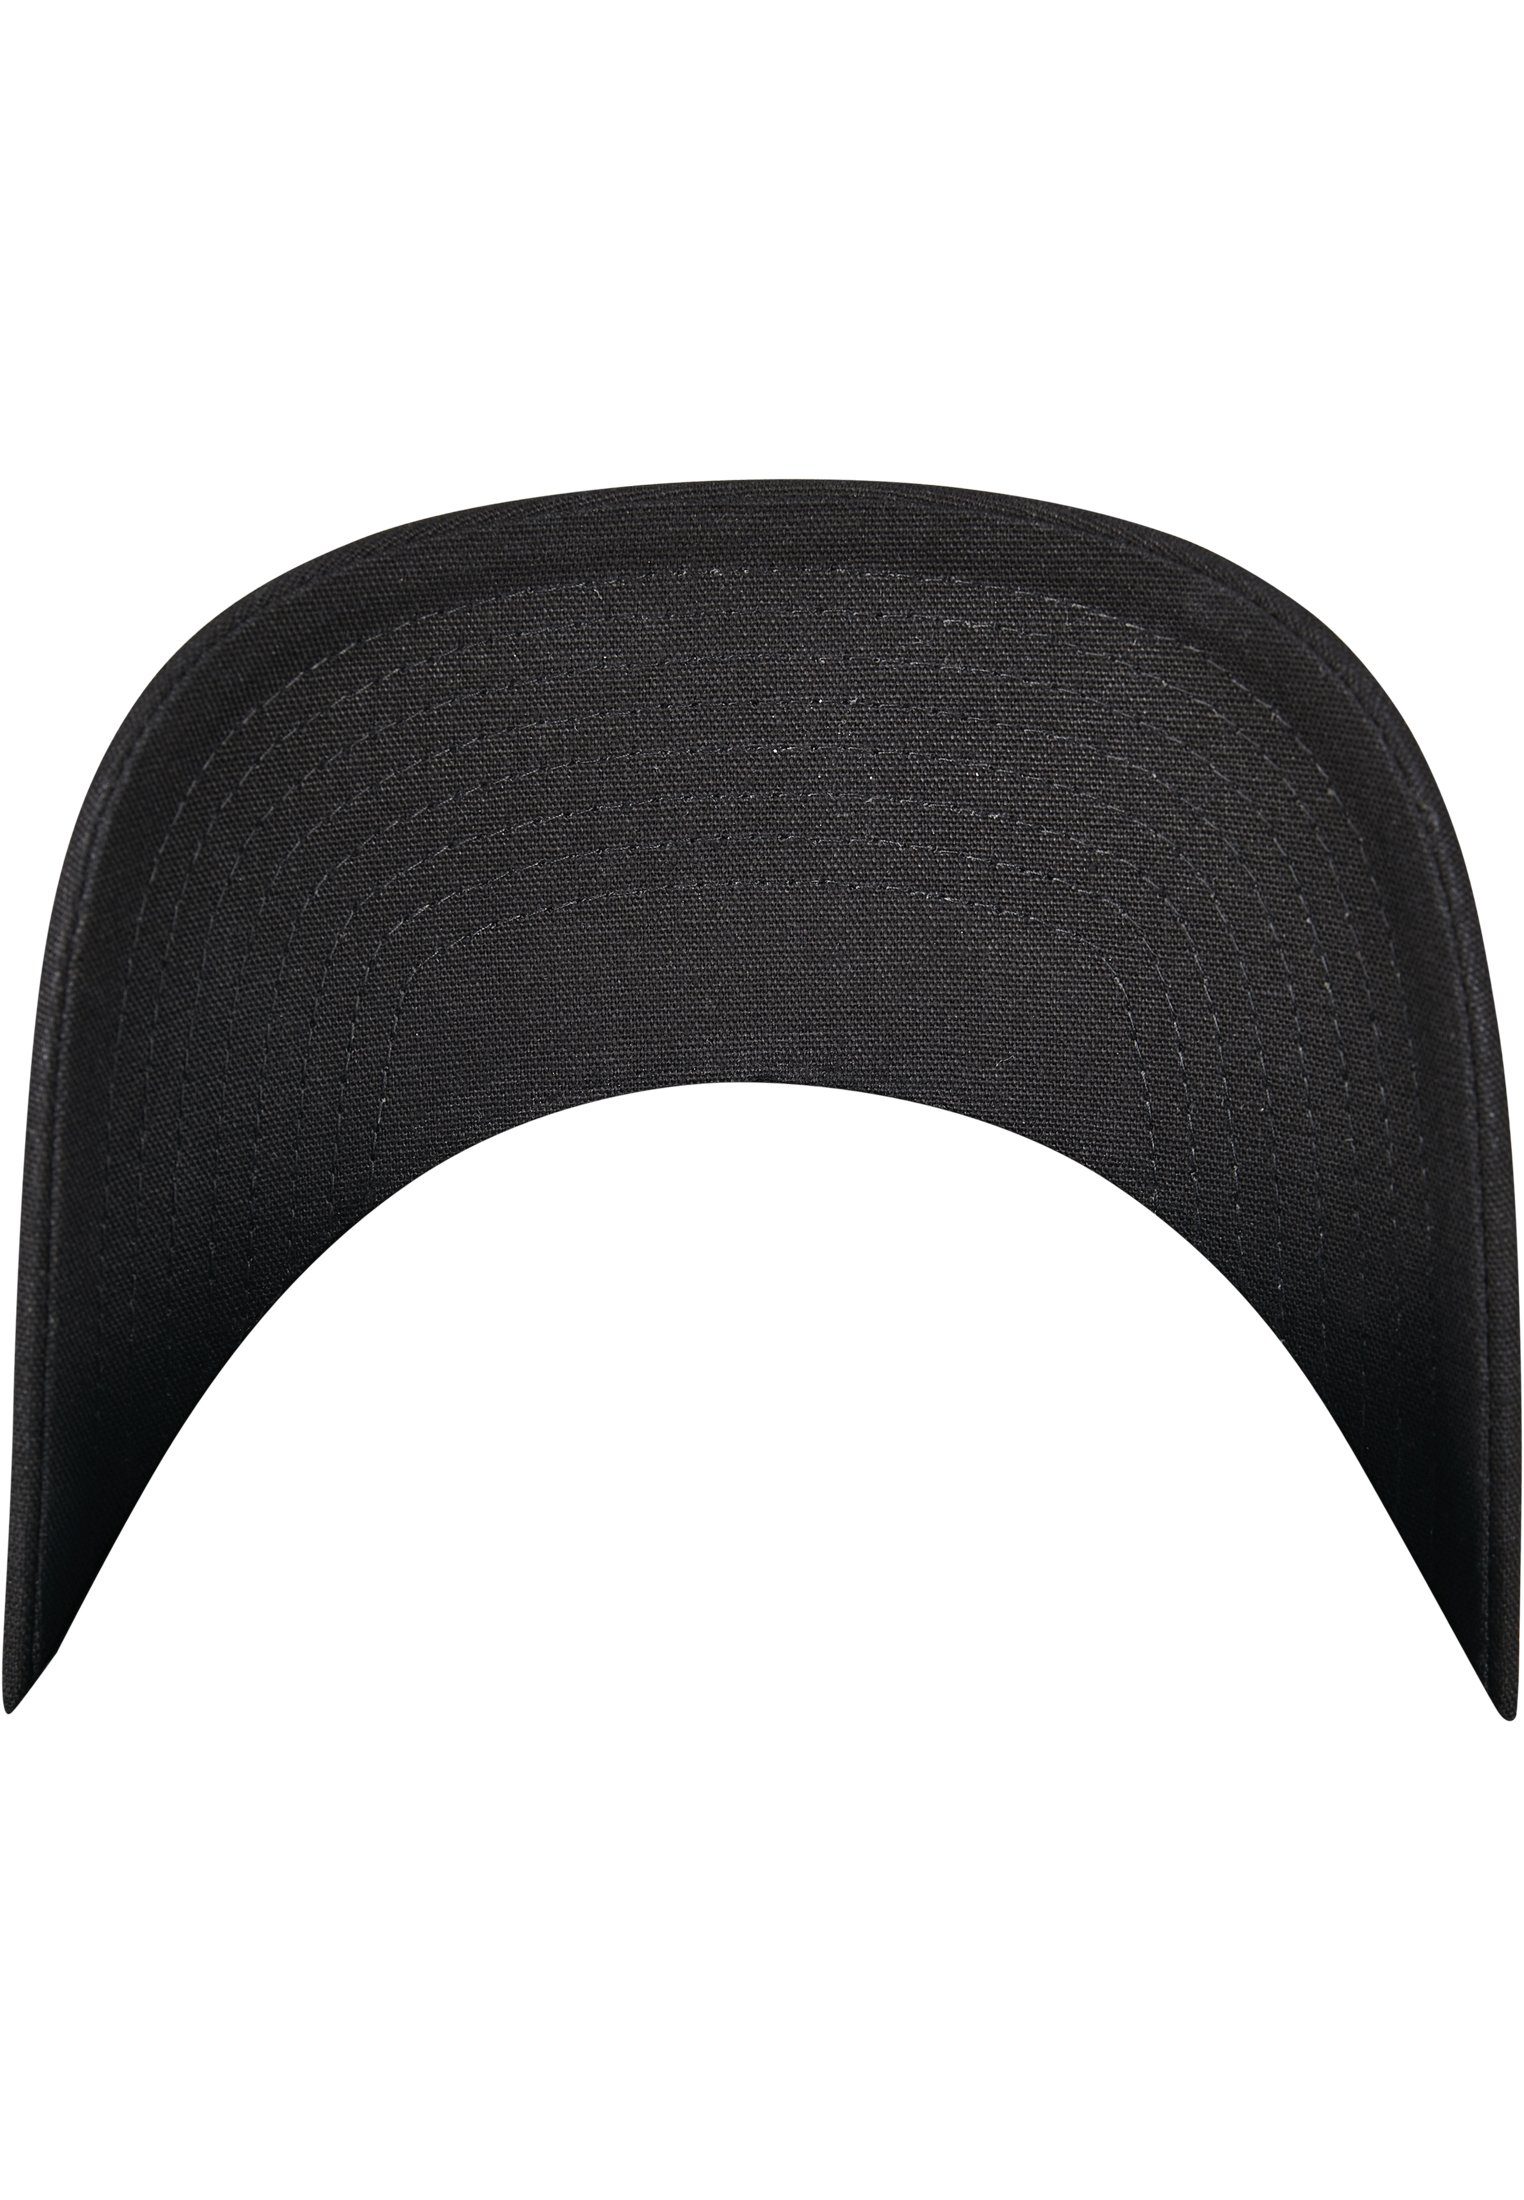 Flexfit Cap Snap black Metal Flex 6-Panel Snapback Curved